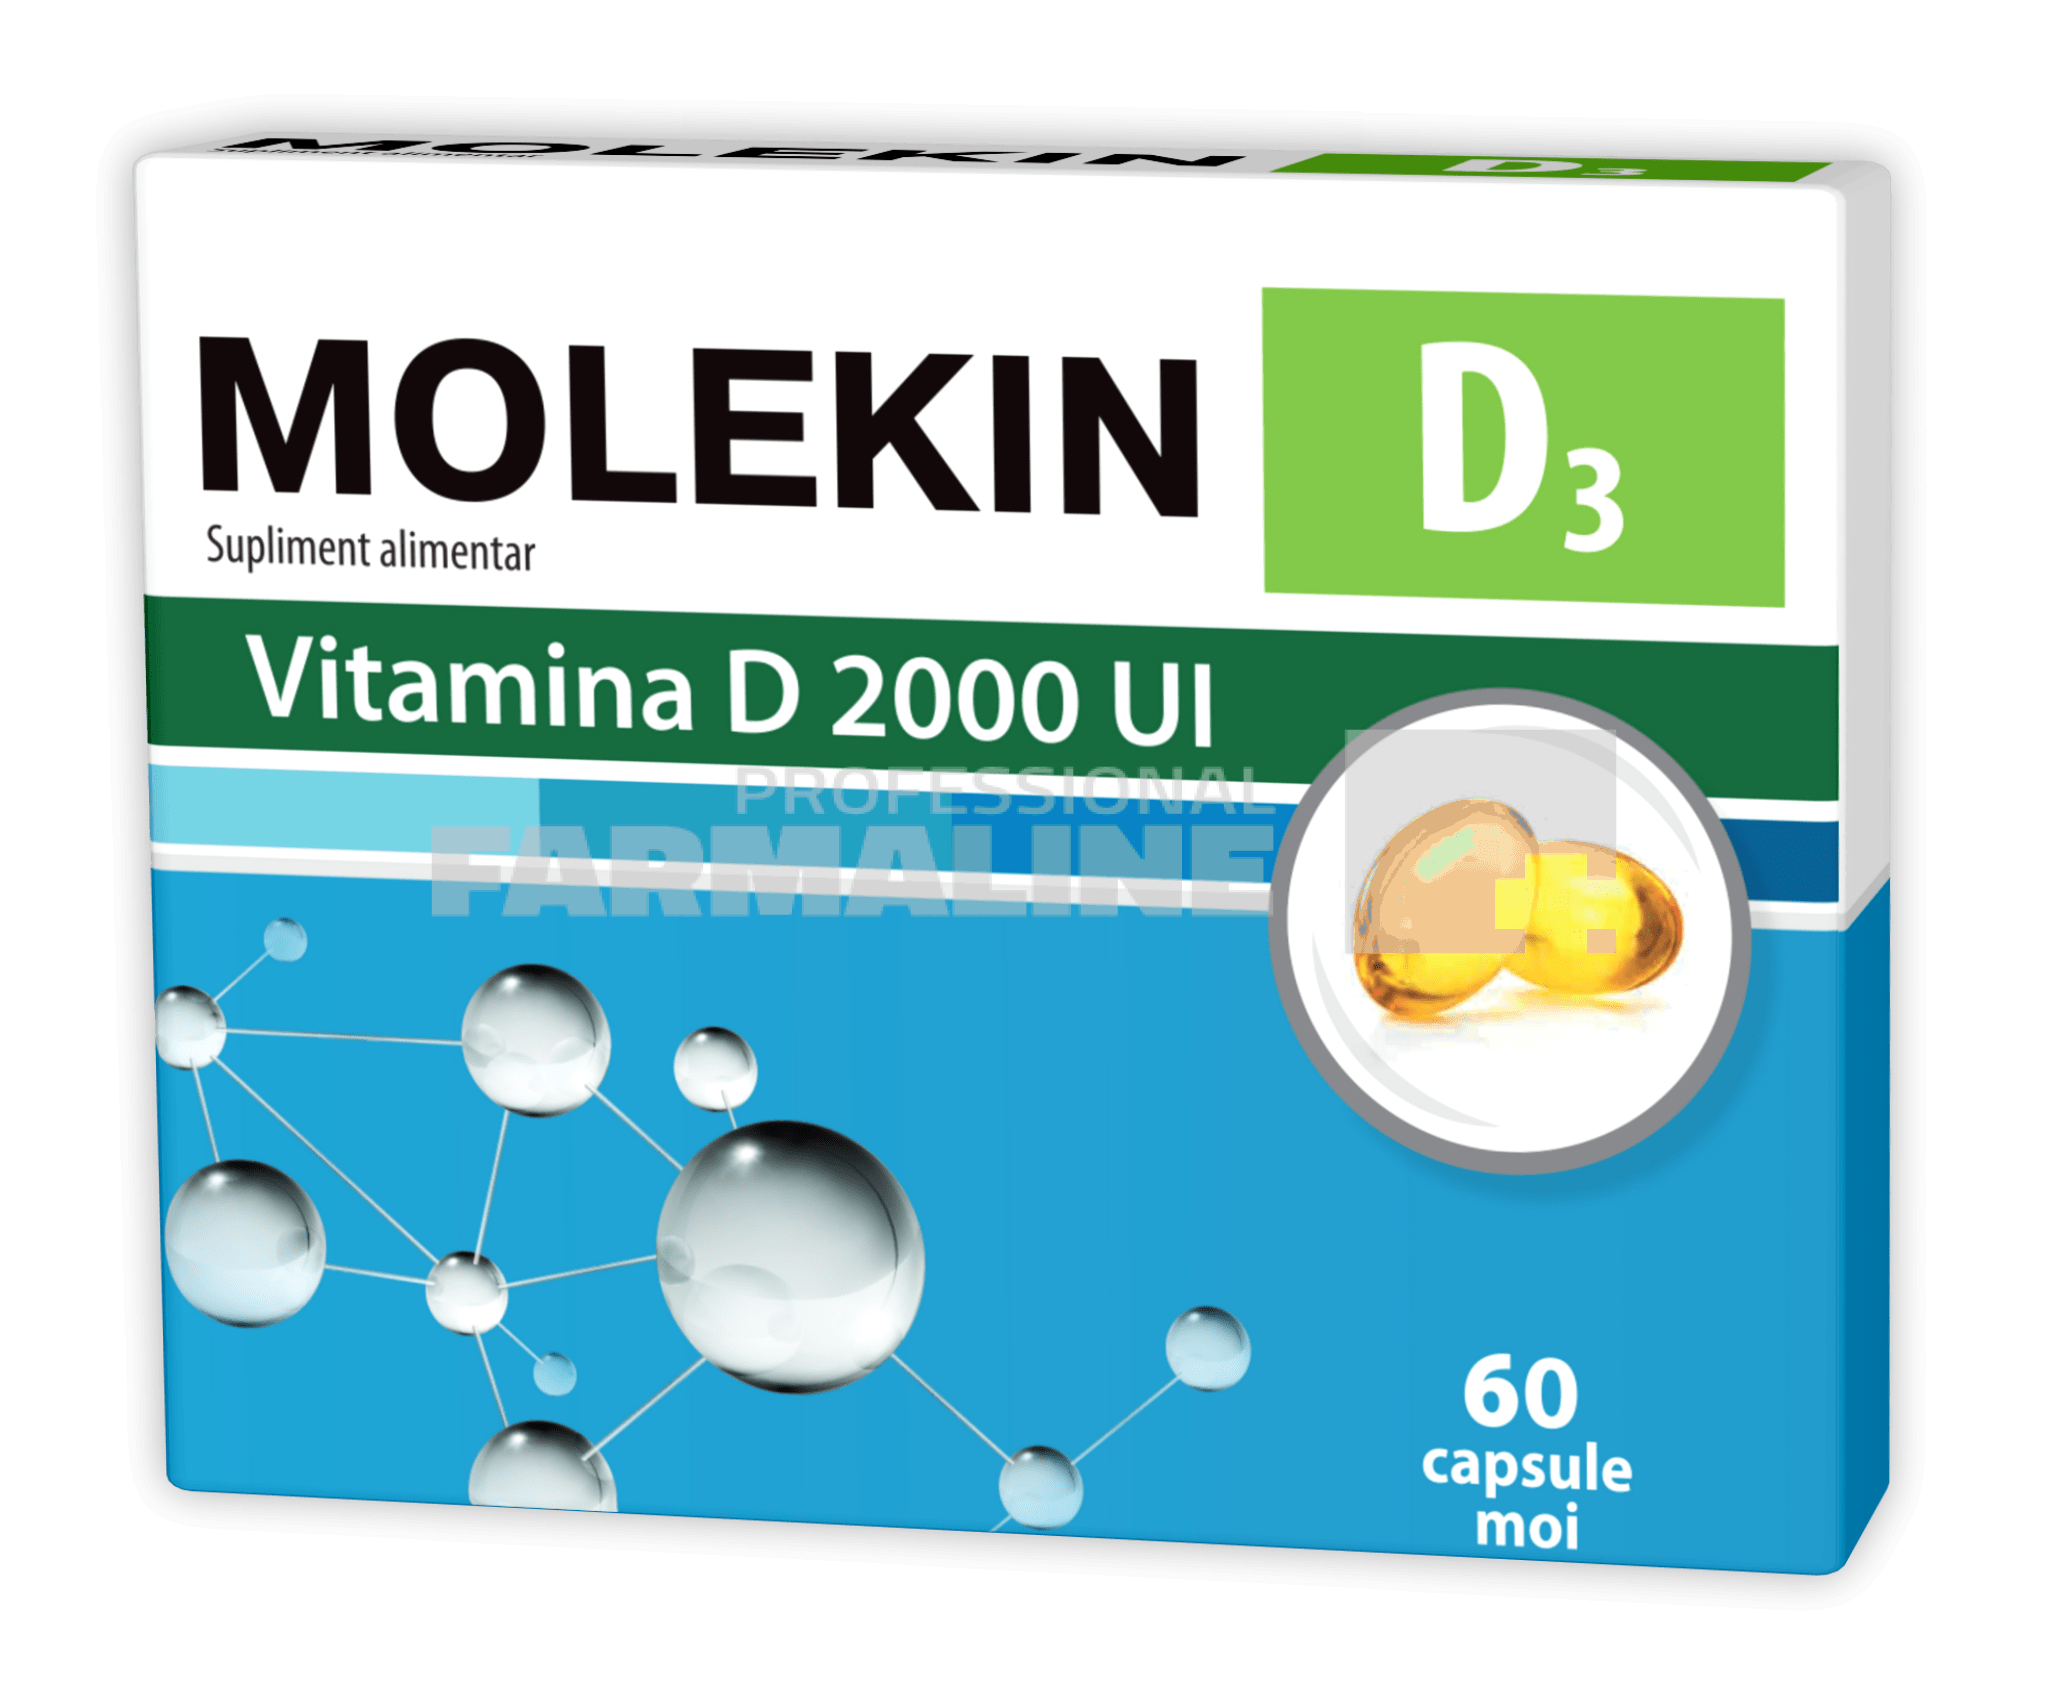 Molekin D3 2000 U.I. 60 capsule moi